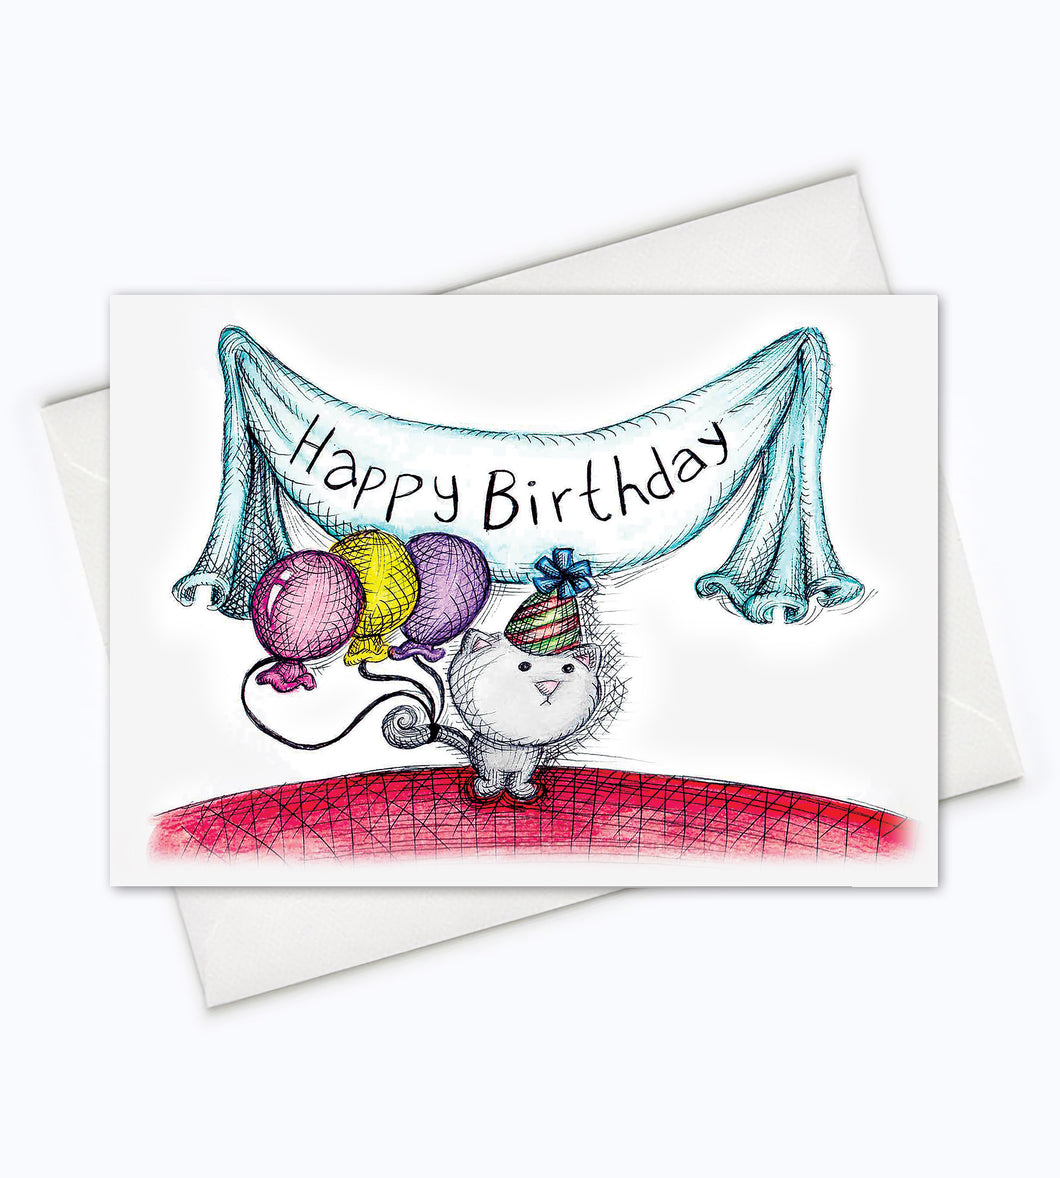 funny cat birthday card